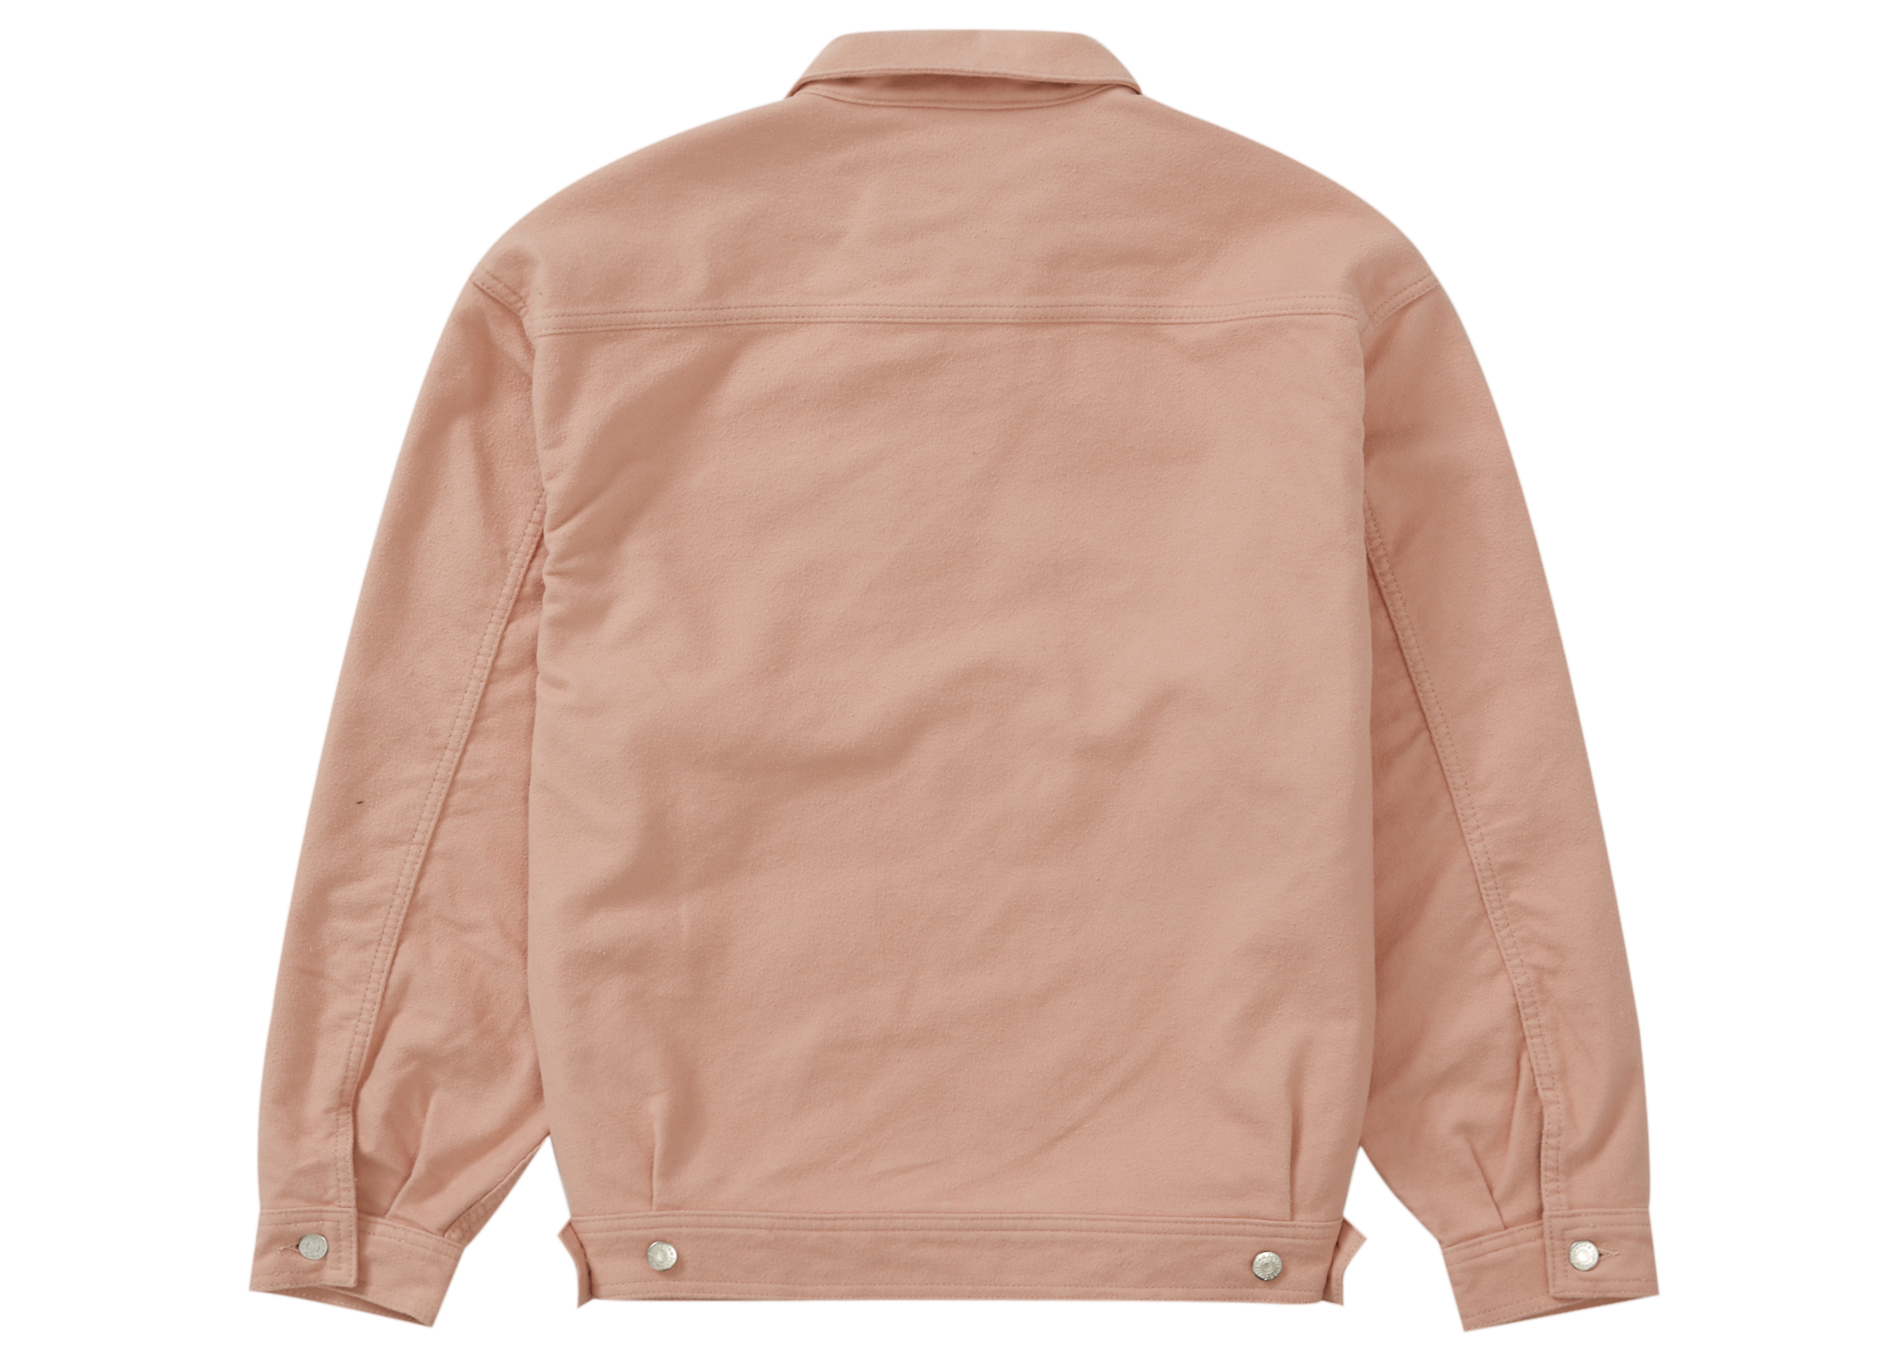 Supreme Moleskin Work Jacket Dusty Pink37000円はいかがでしょうか